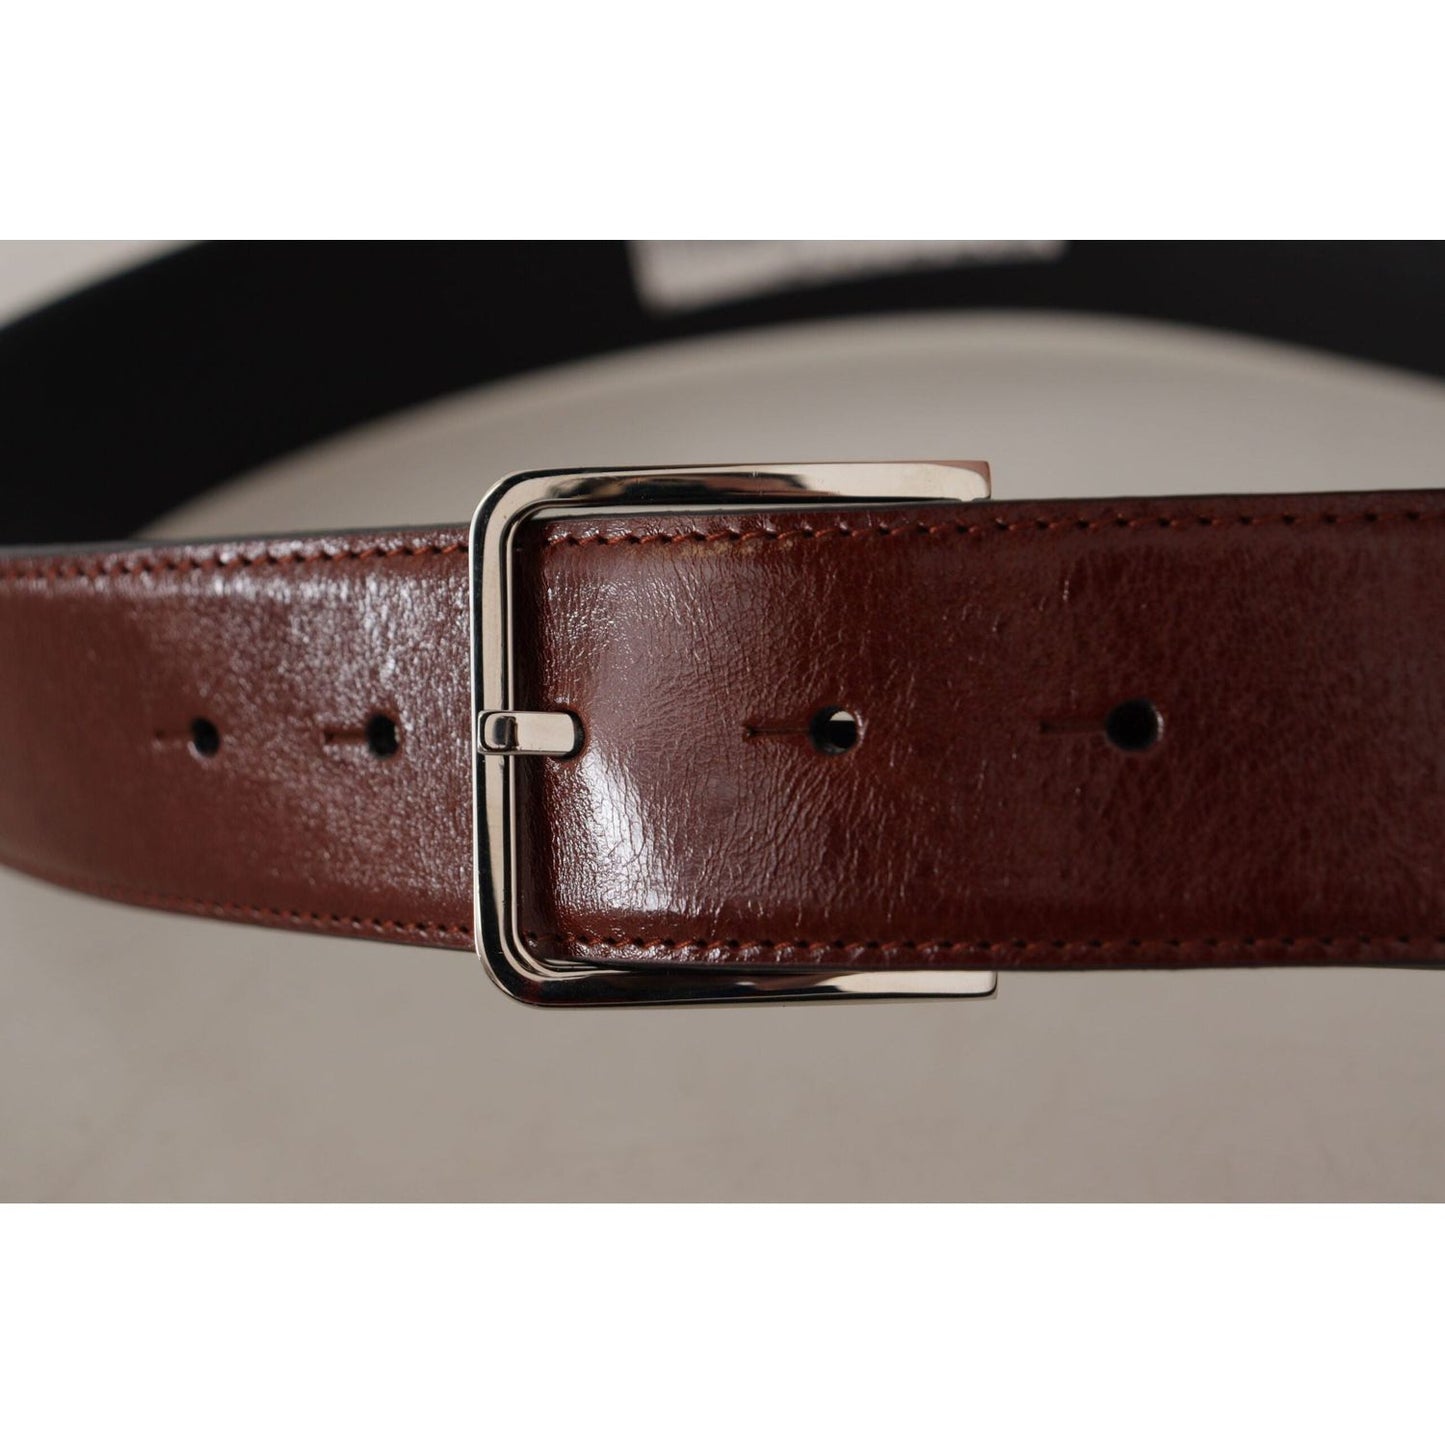 Dolce & Gabbana Elegant Leather Belt with Engraved Buckle bordeaux-calf-patent-leather-logo-waist-buckle-belt